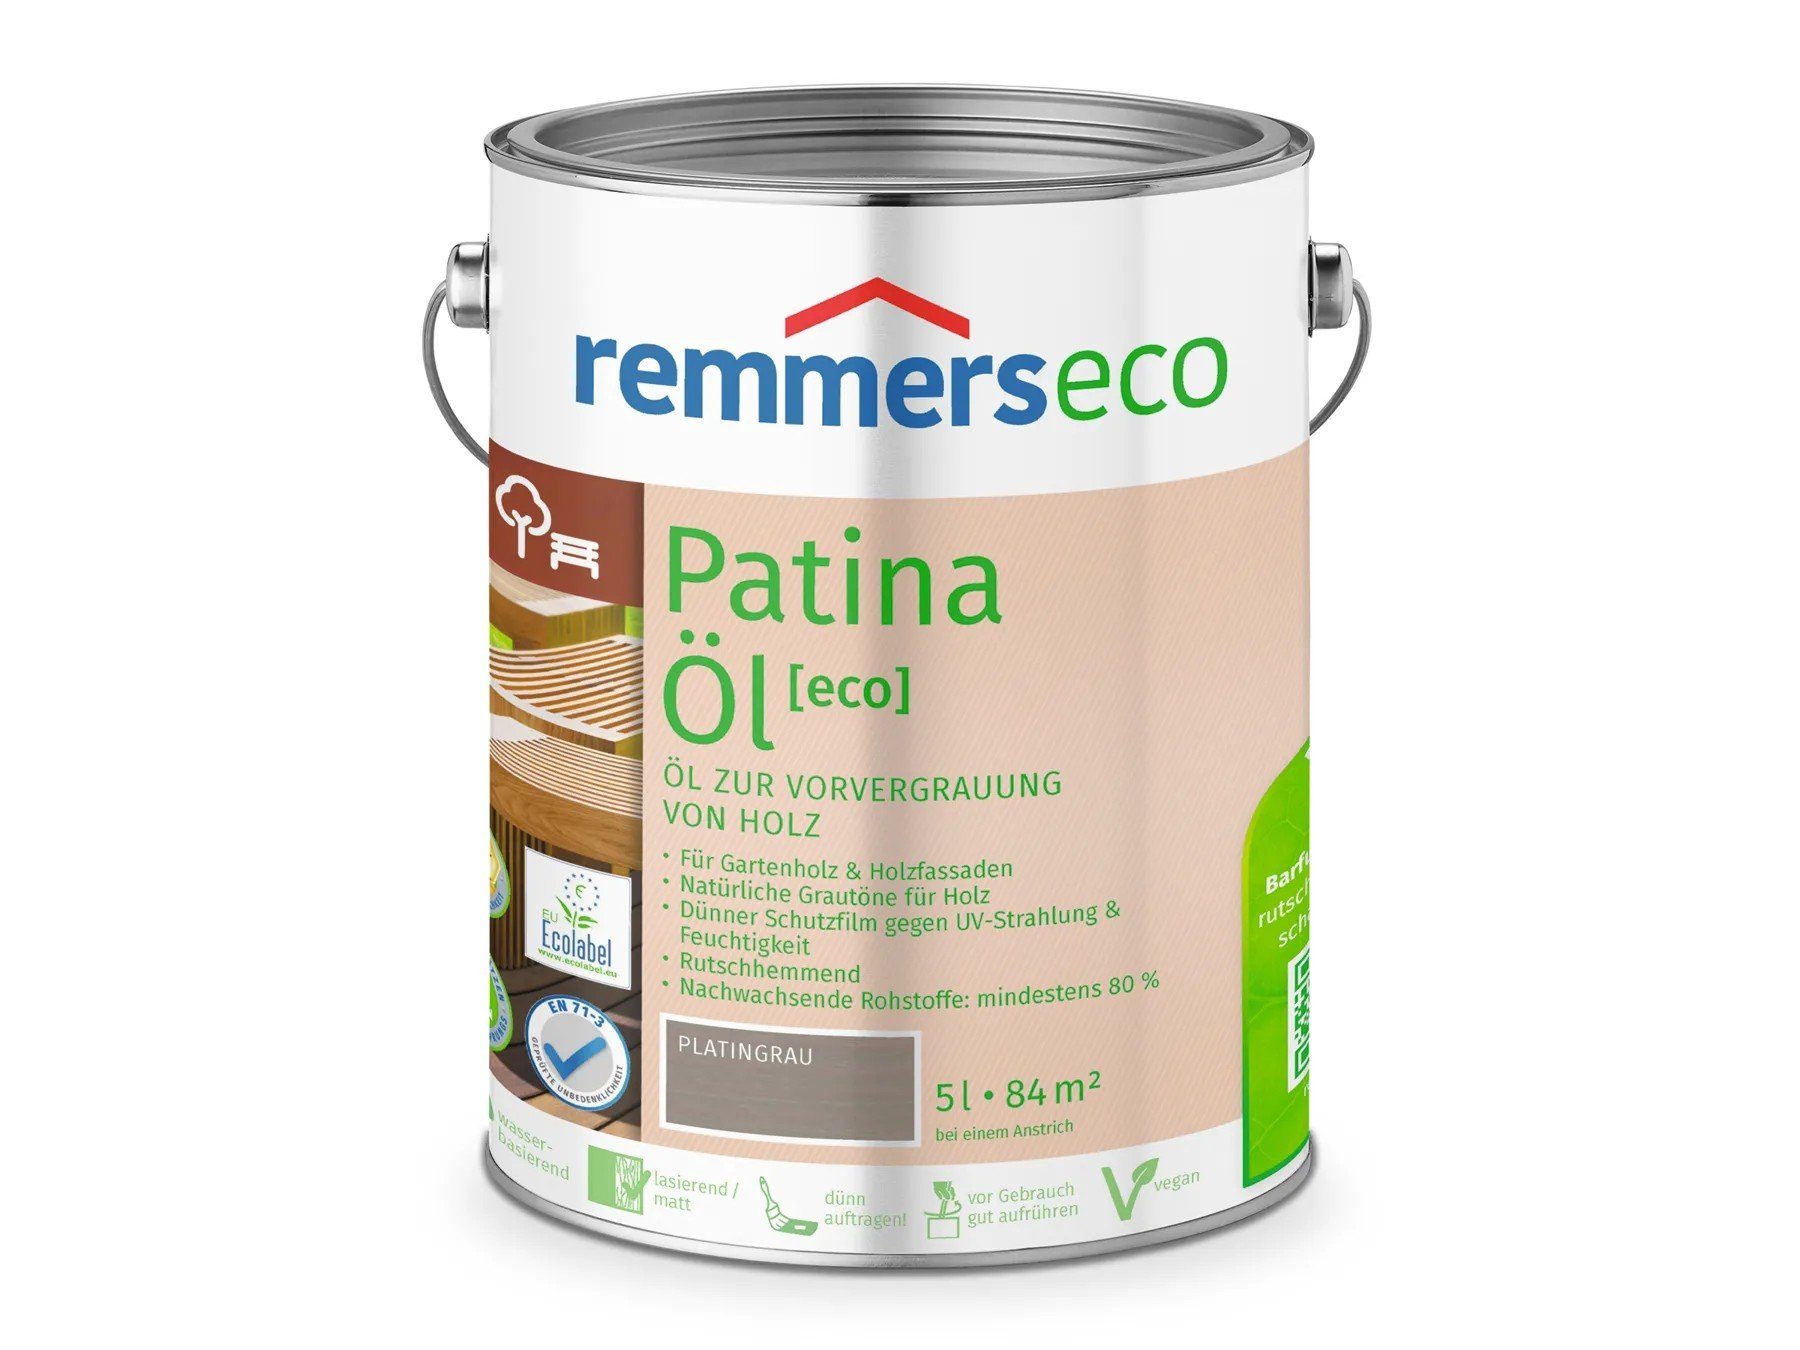 Remmers Holzöl Patina-Öl [eco] platingrau